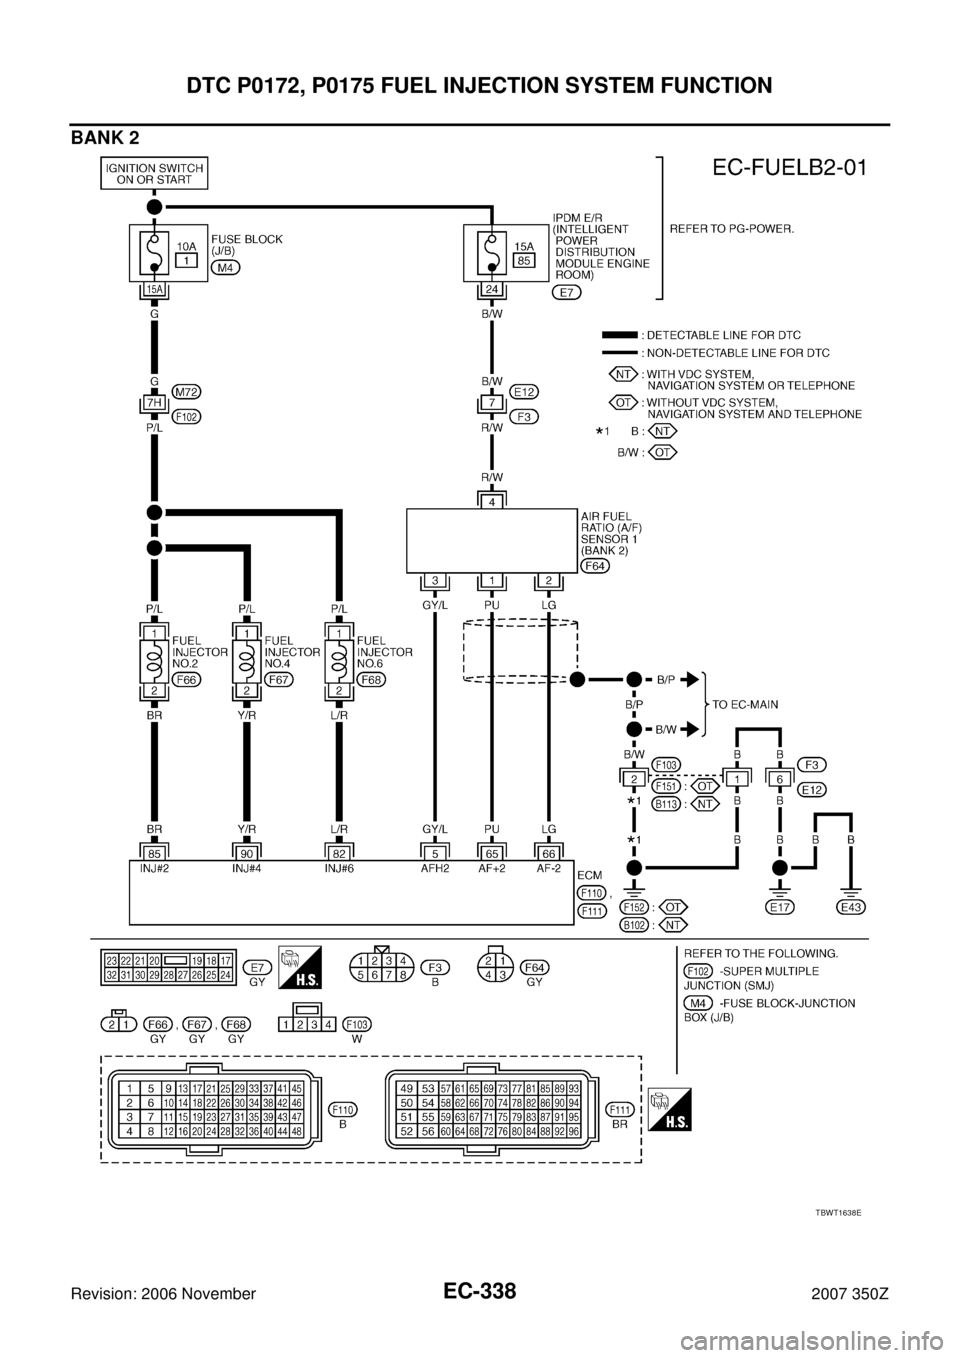 NISSAN 350Z 2007 Z33 Engine Control Workshop Manual EC-338
DTC P0172, P0175 FUEL INJECTION SYSTEM FUNCTION
Revision: 2006 November2007 350Z
BANK 2
TBWT1638E 